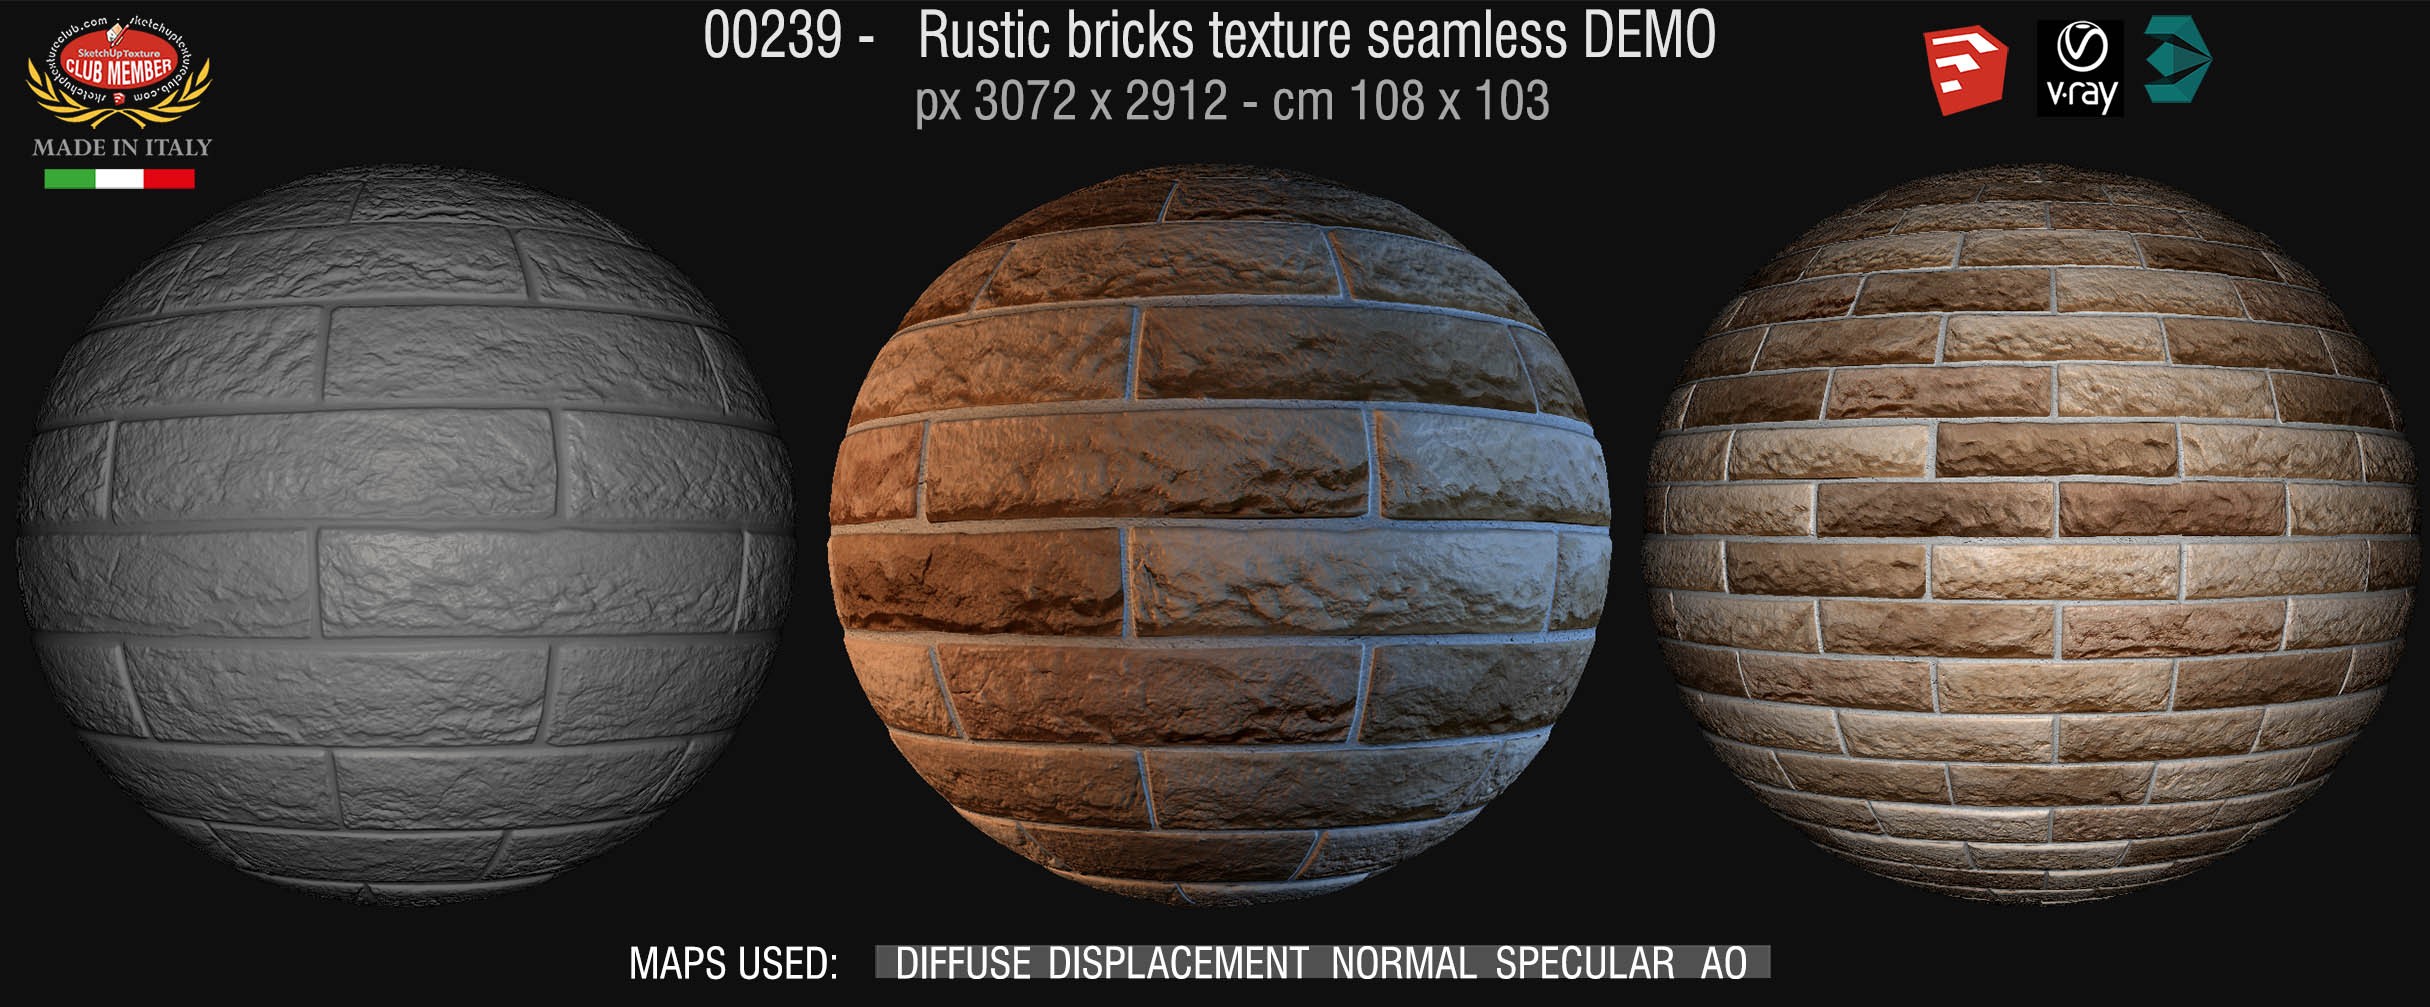 00239 Rustic bricks texture seamless + maps DEMO